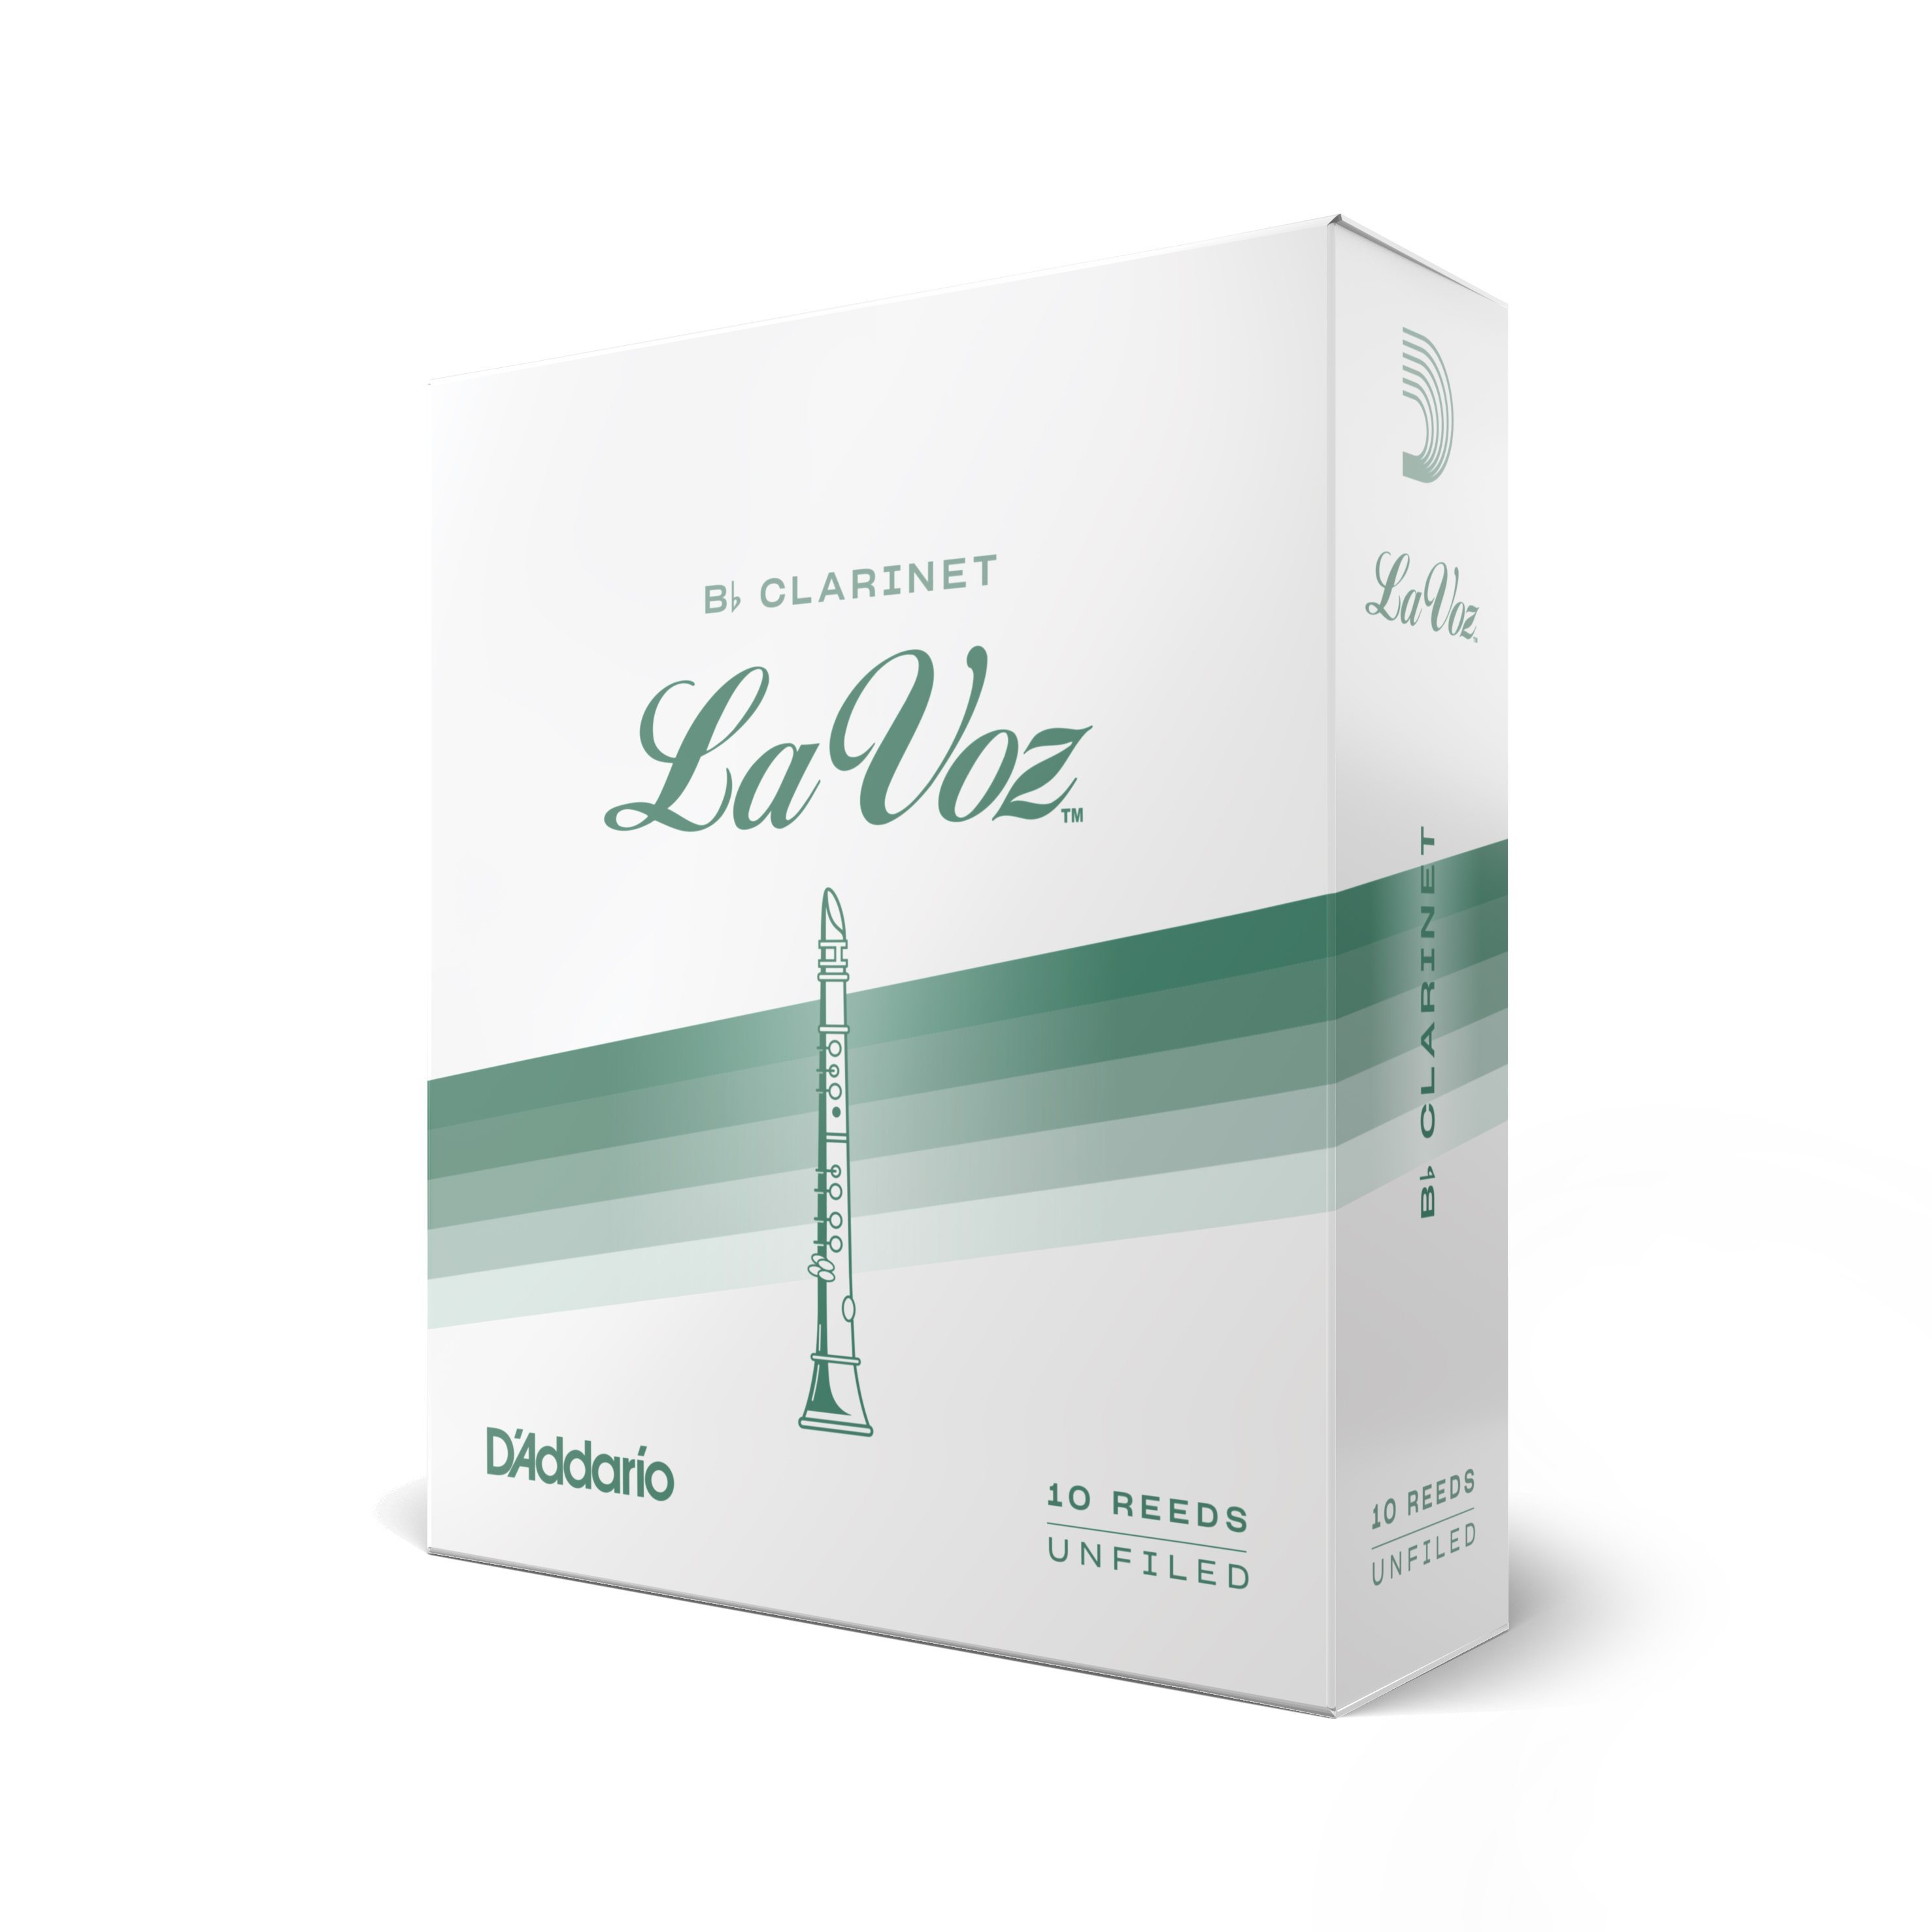 Box of Ten LaVoz B Flat Clarinet reeds